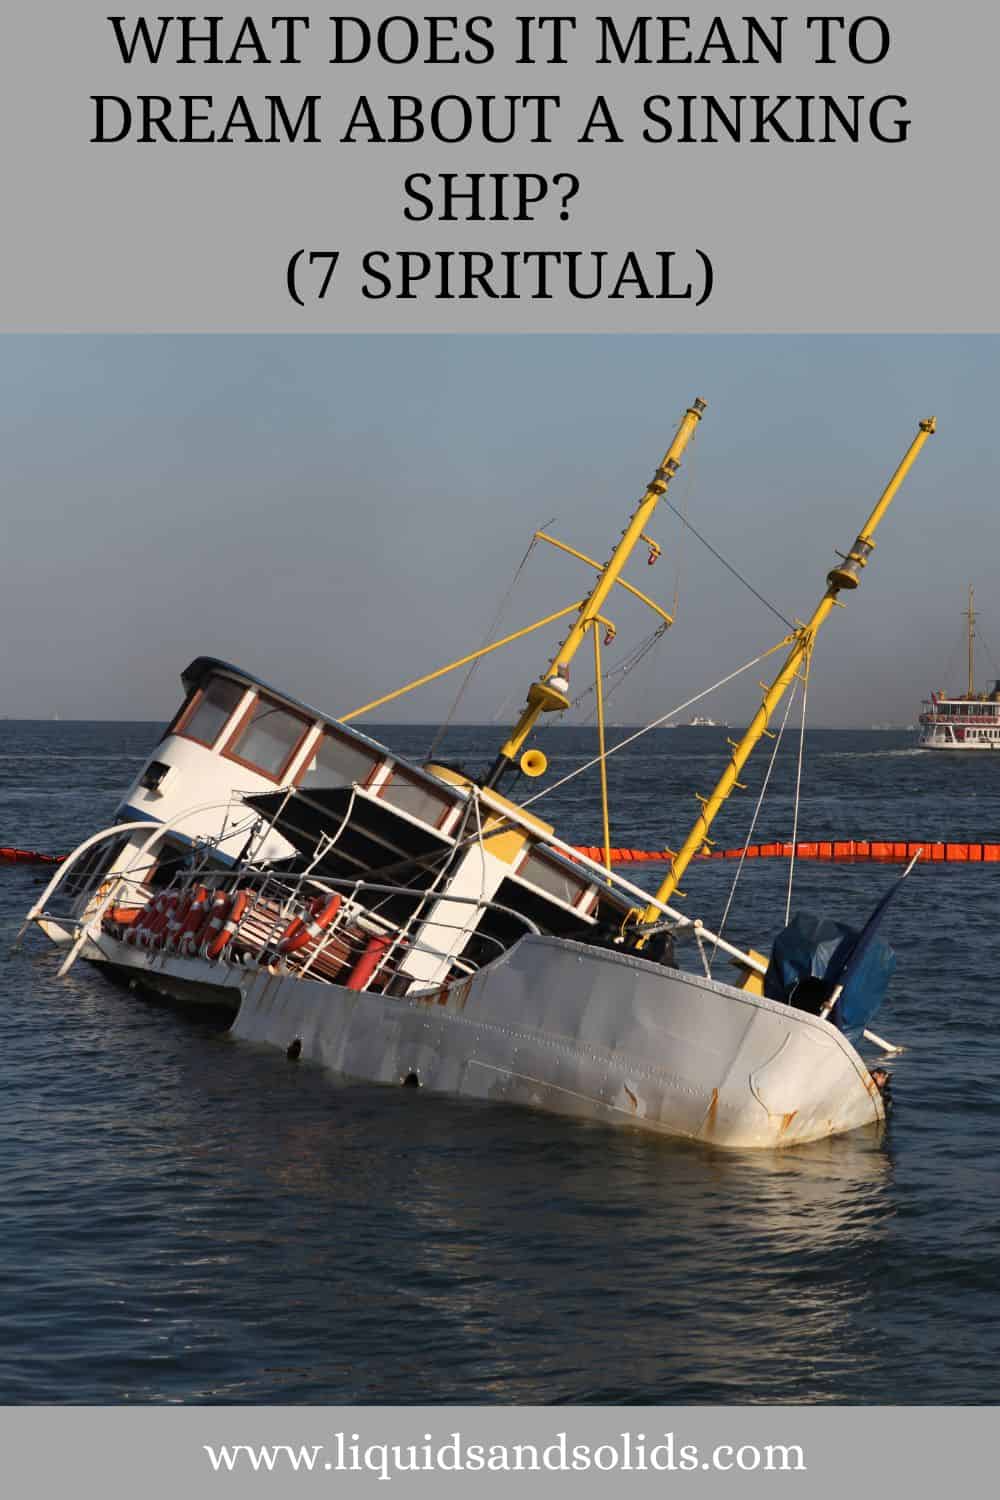  Drøm om synkende skib? (7 spirituelle betydninger)